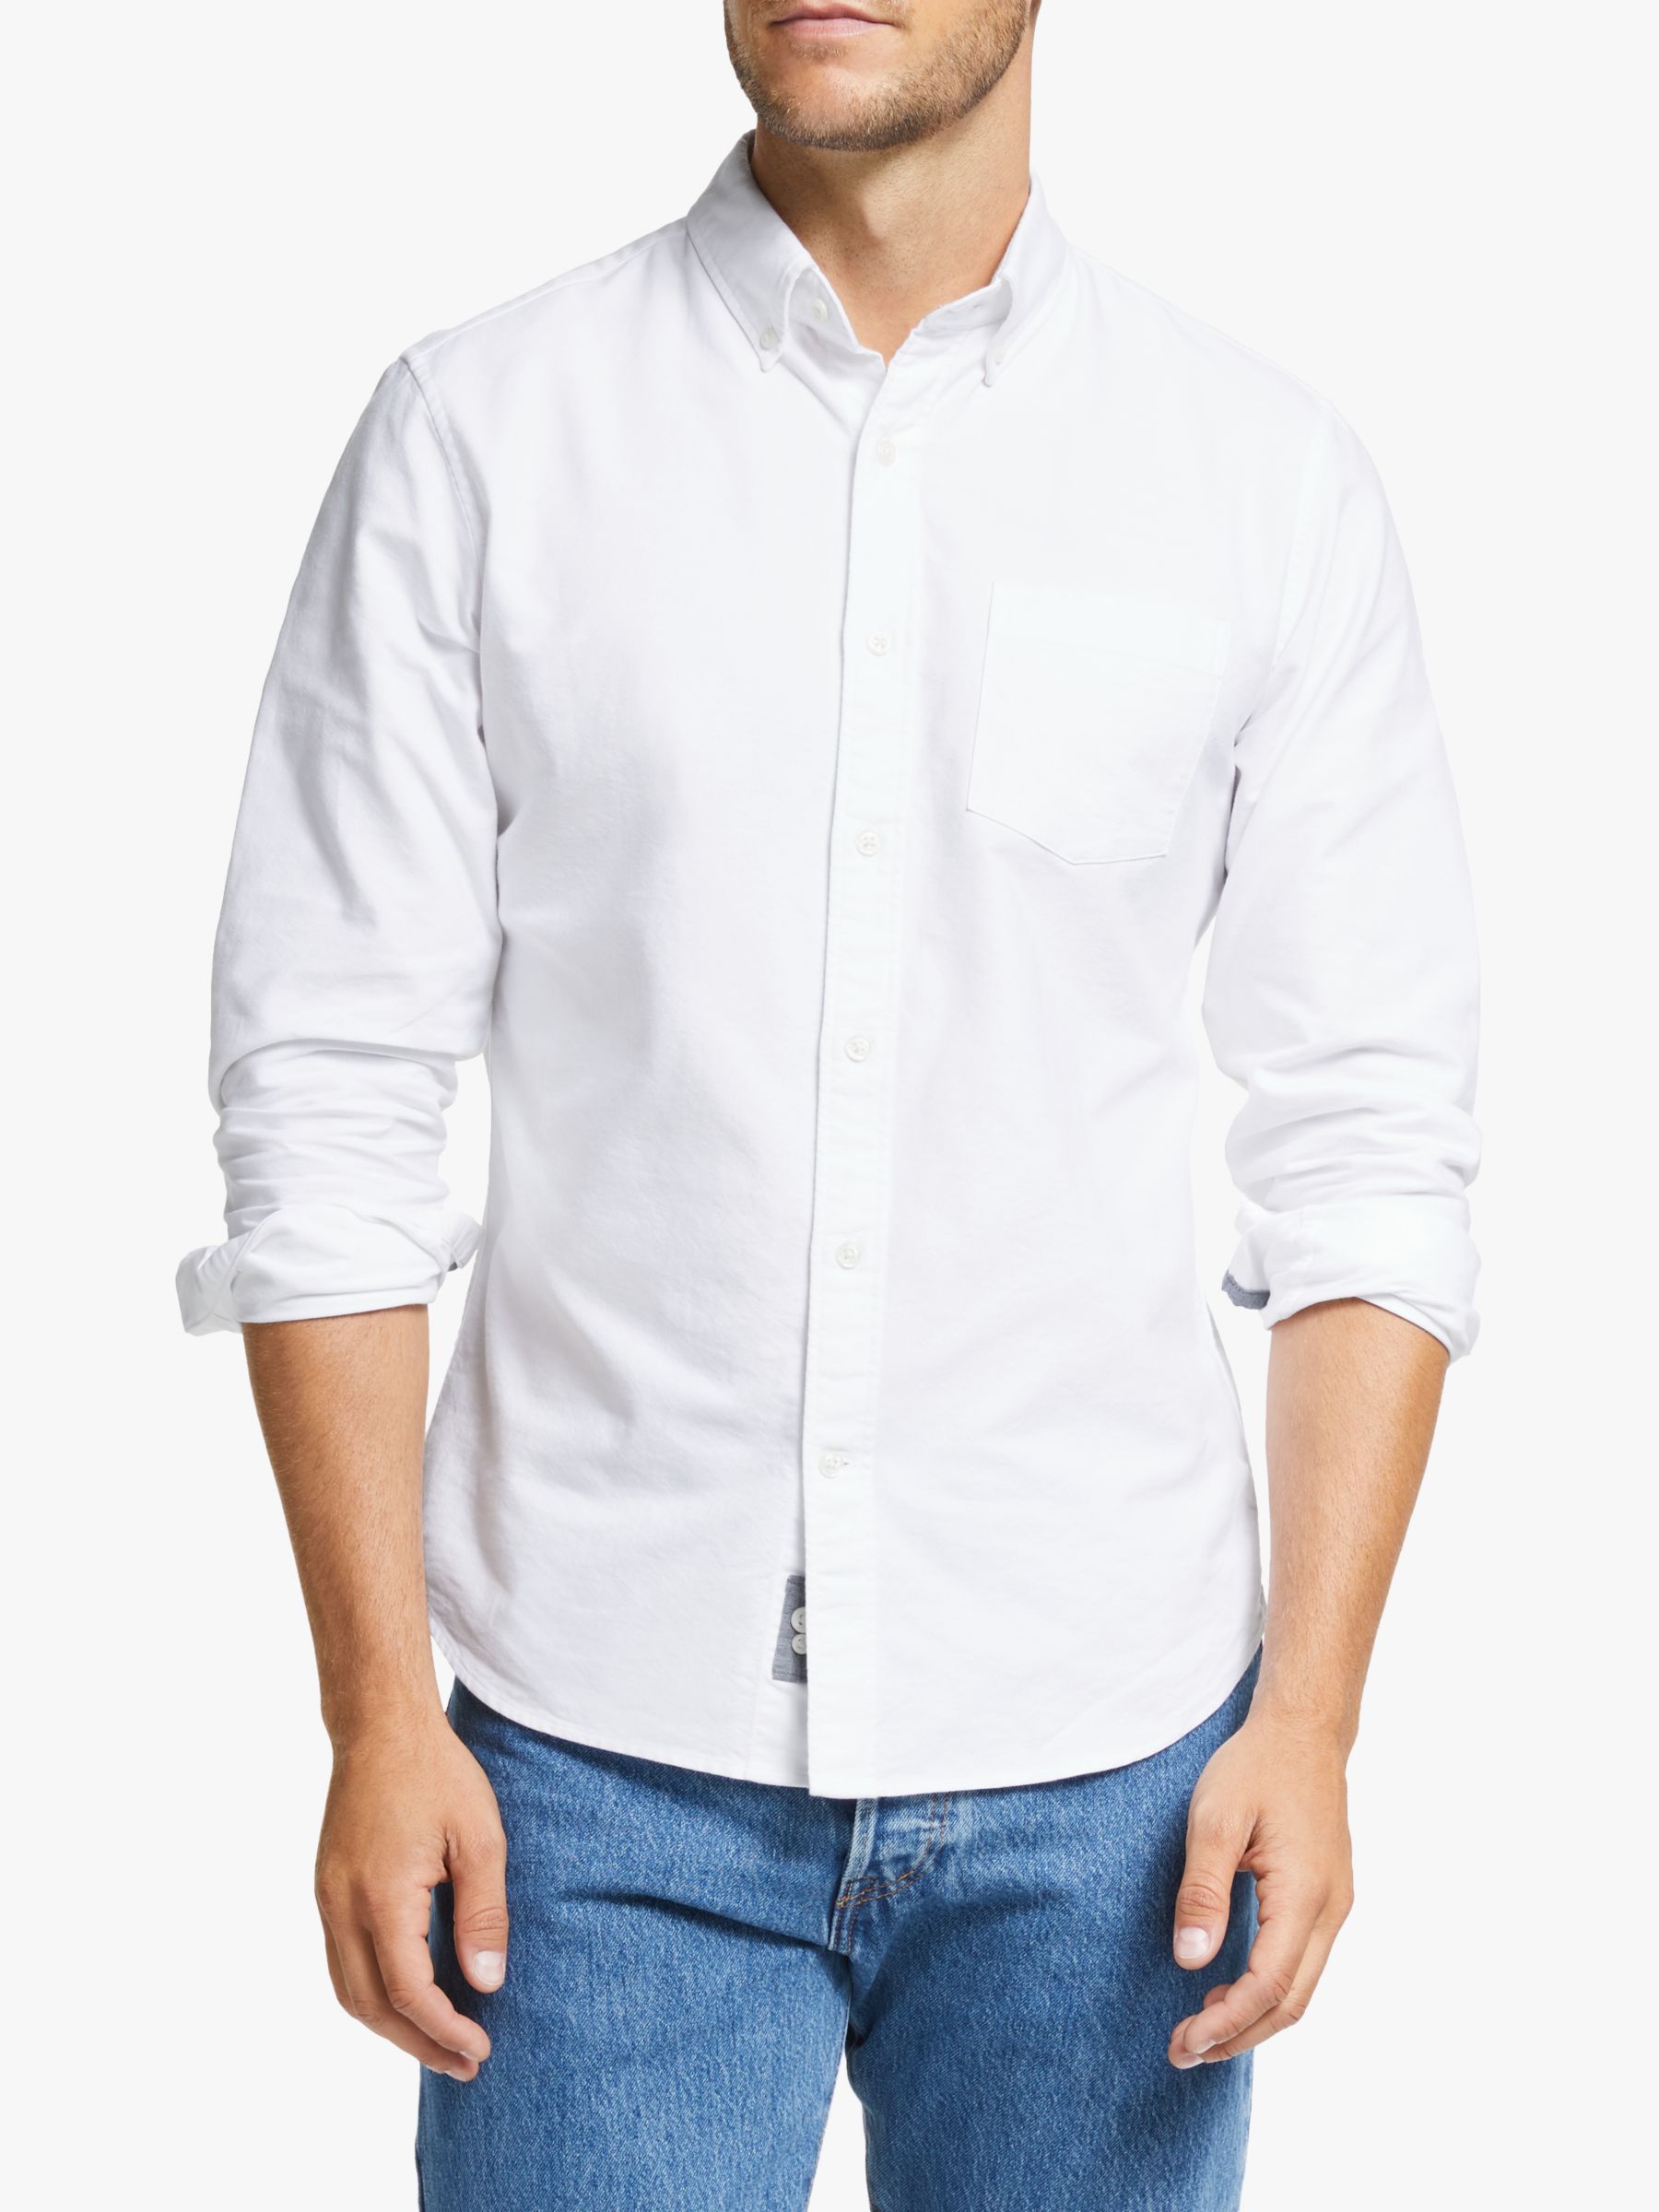 John Lewis & Partners Slim Fit Oxford Shirt, White